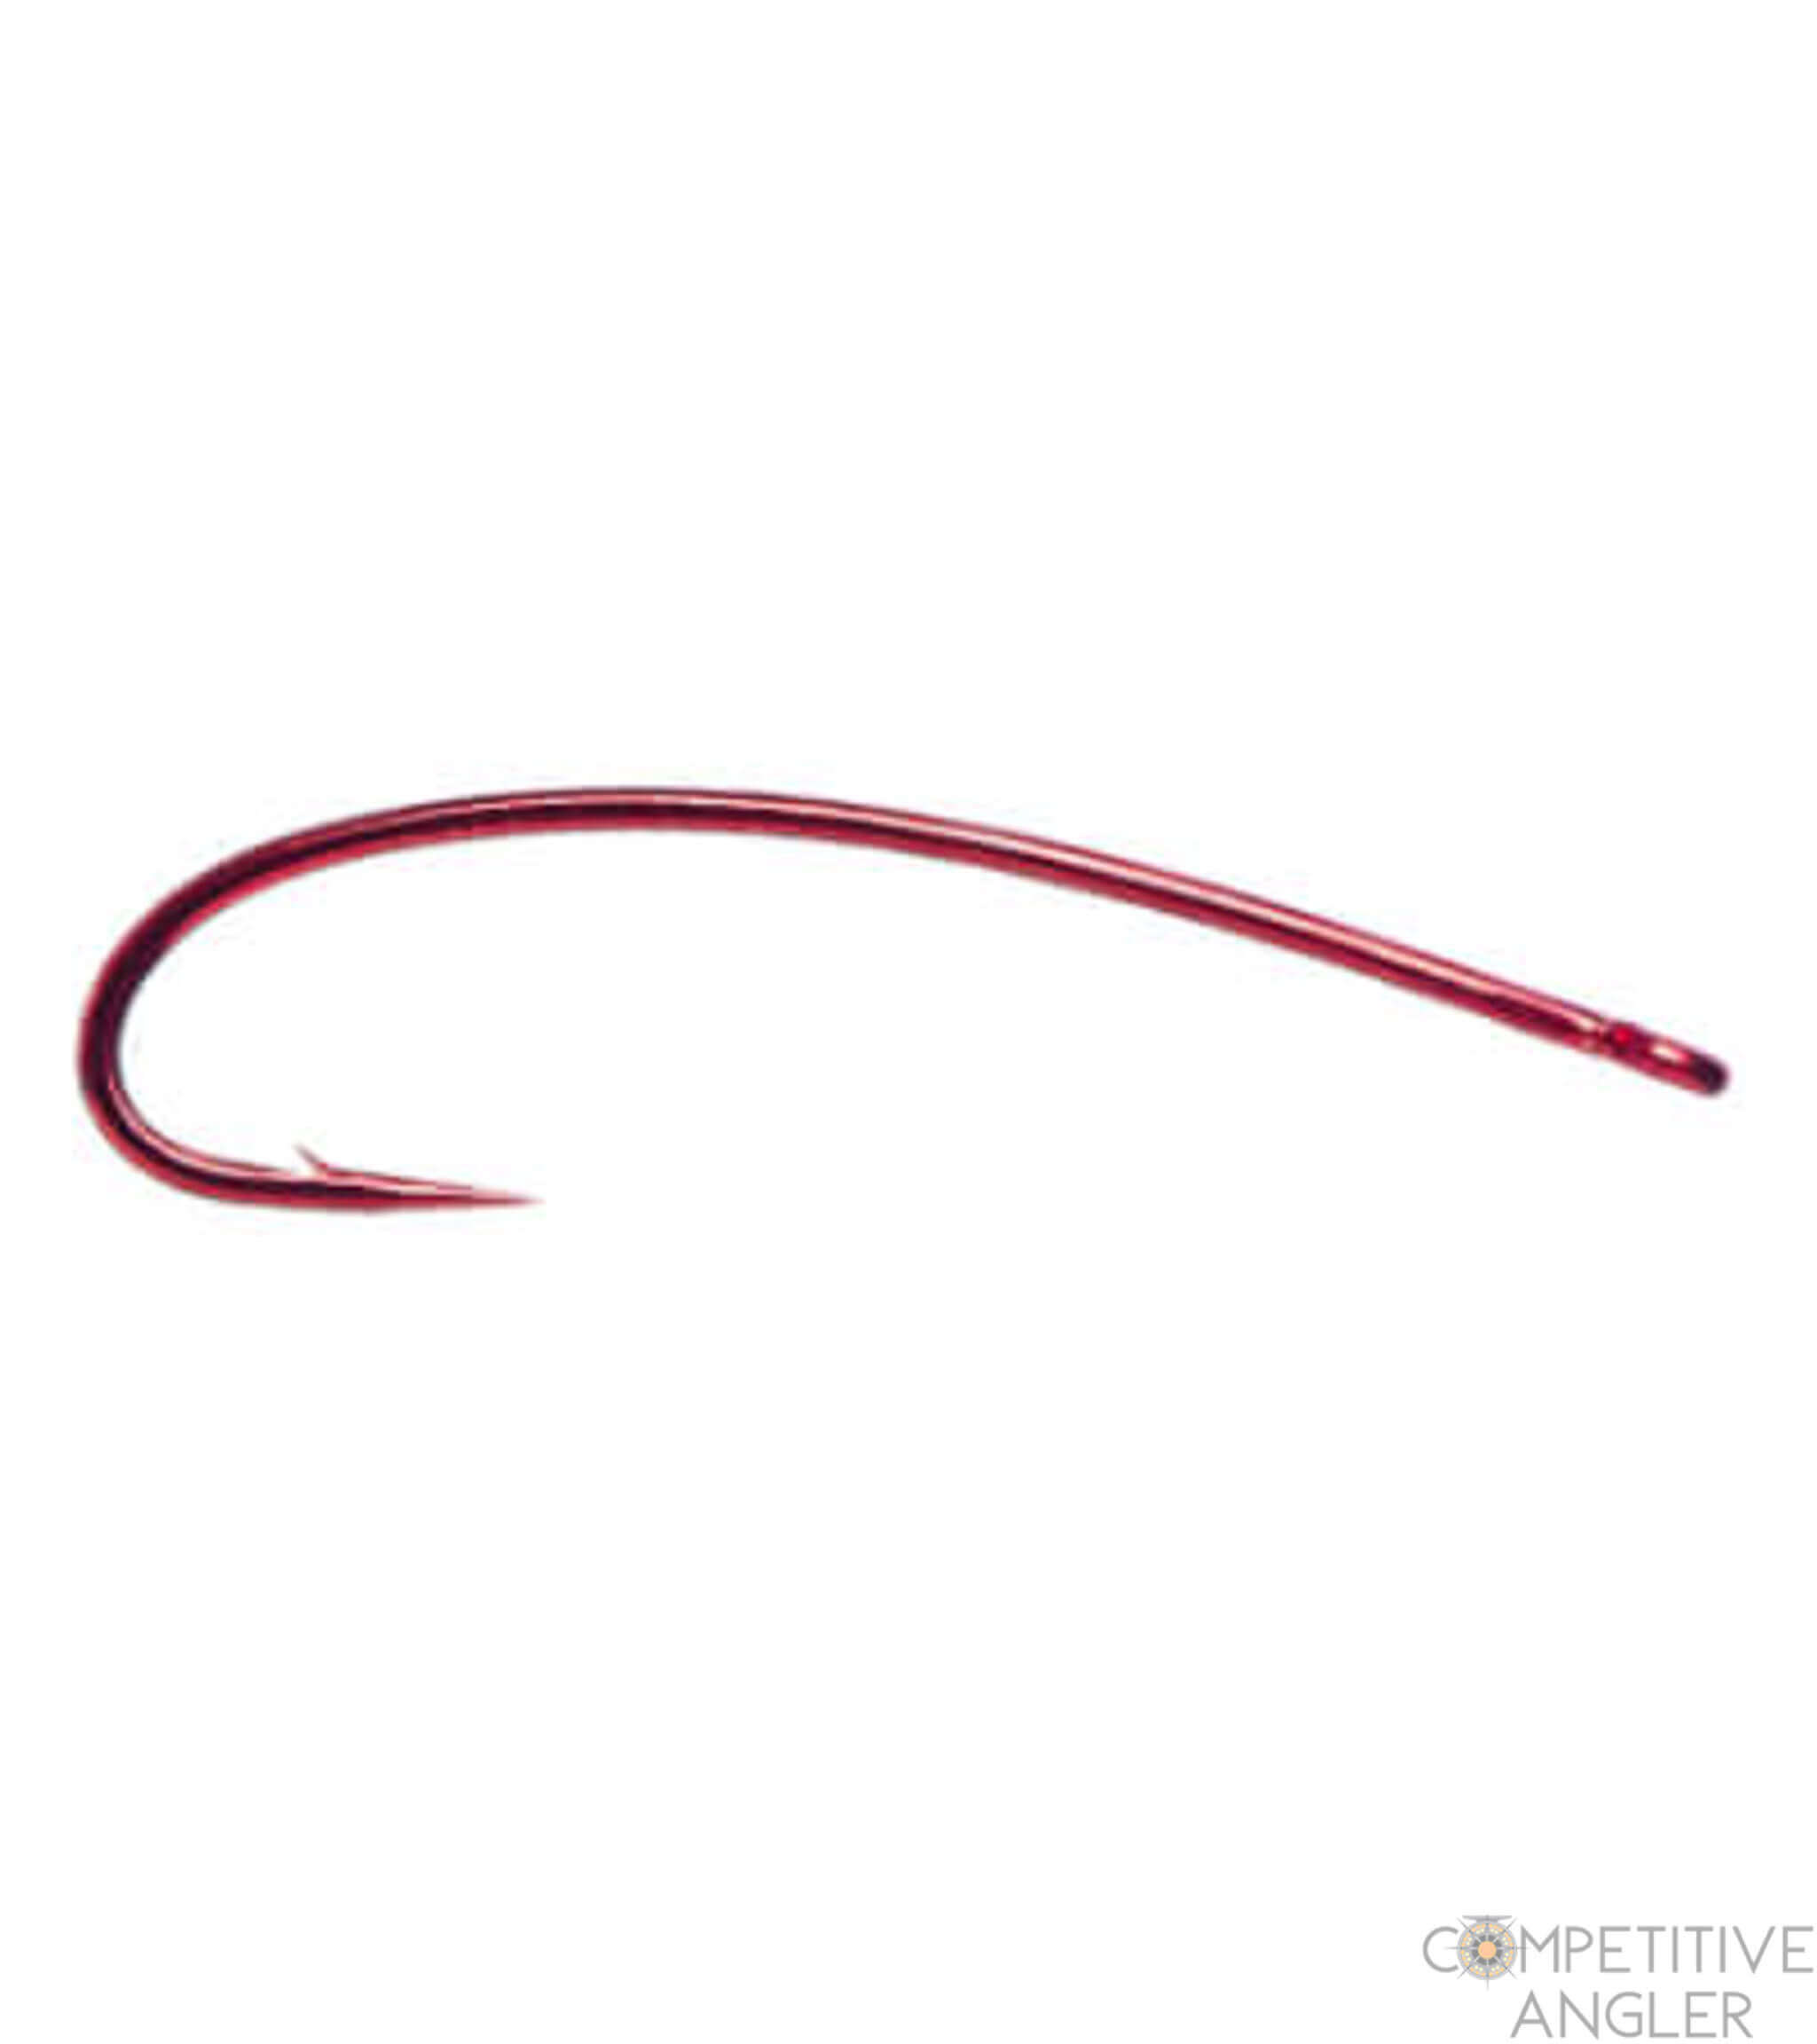 https://competitiveangler.com/wp-content/uploads/2017/07/daiichi-1273-multi-use-curved-hook-red.jpg